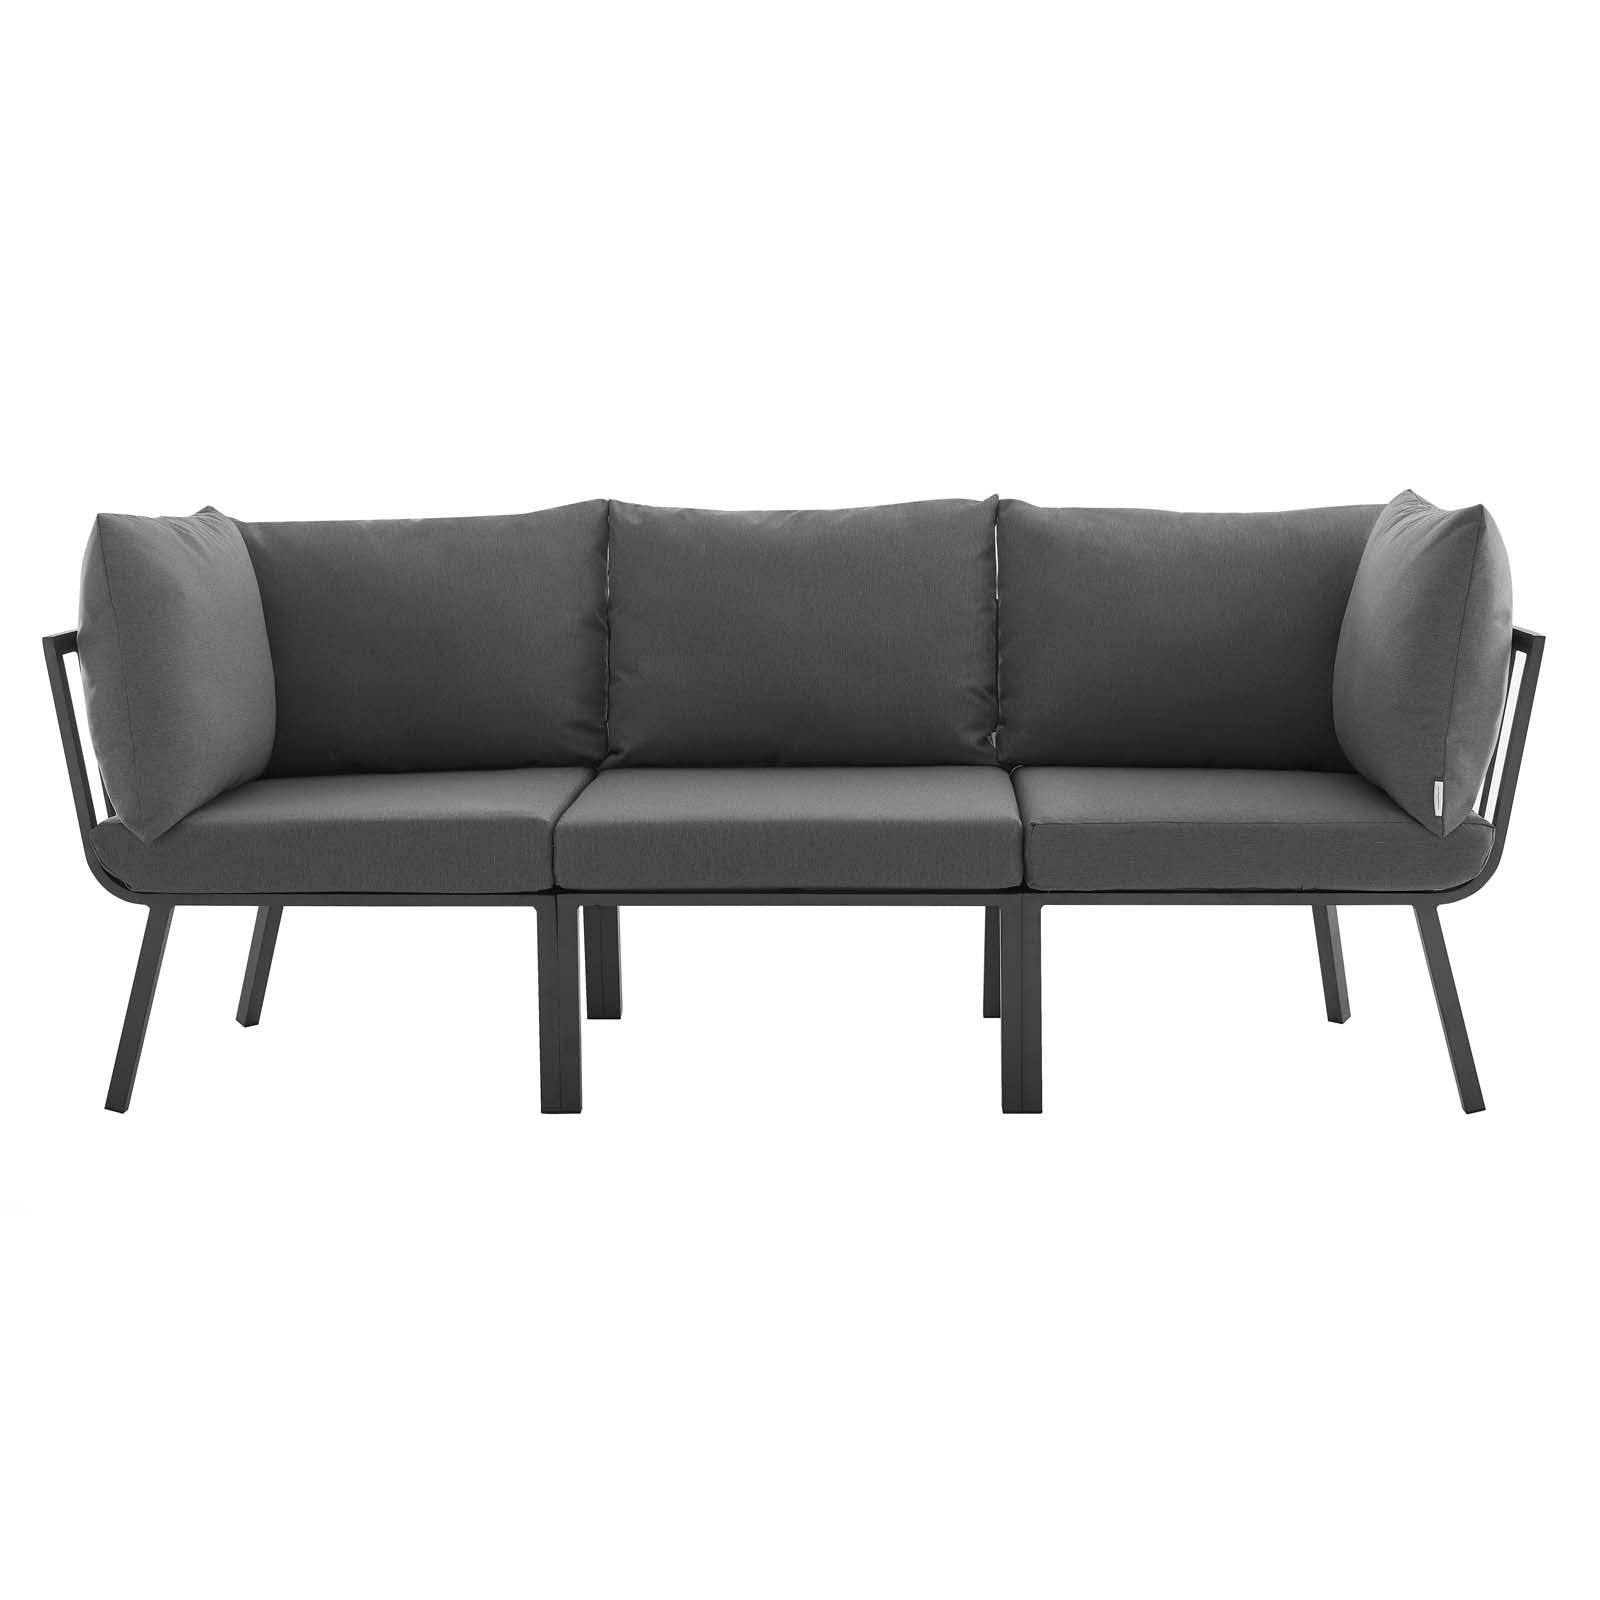 Modway Outdoor Conversation Sets - Riverside 3 Piece Outdoor Patio Aluminum Sectional Sofa Set Gray Charcoal